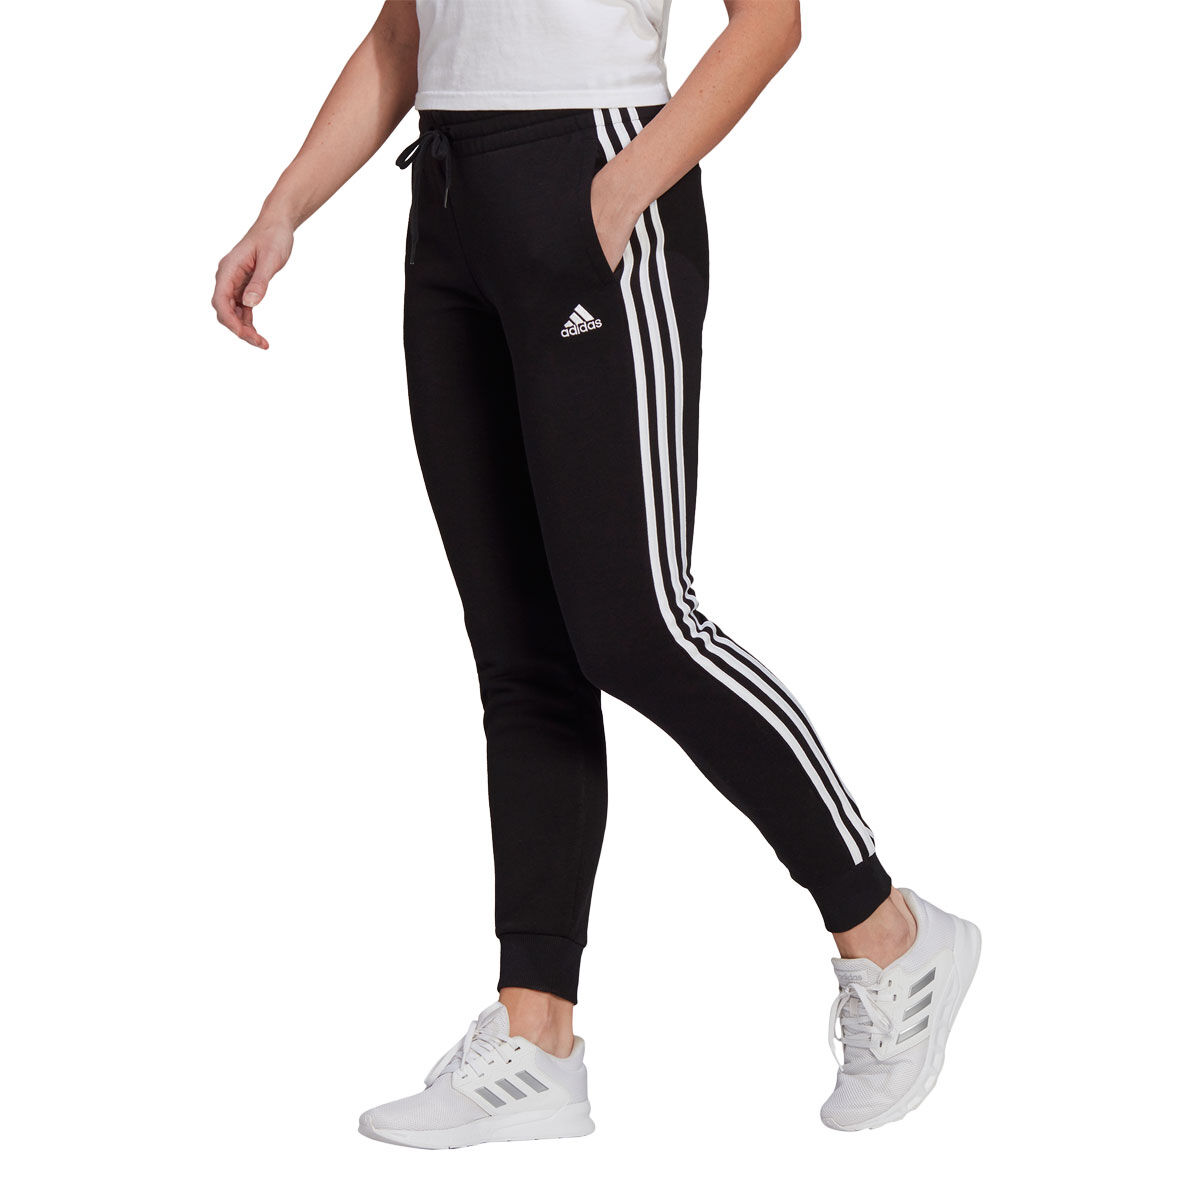 adidas Softball Pants Women's Small Large Black Red Stripe New